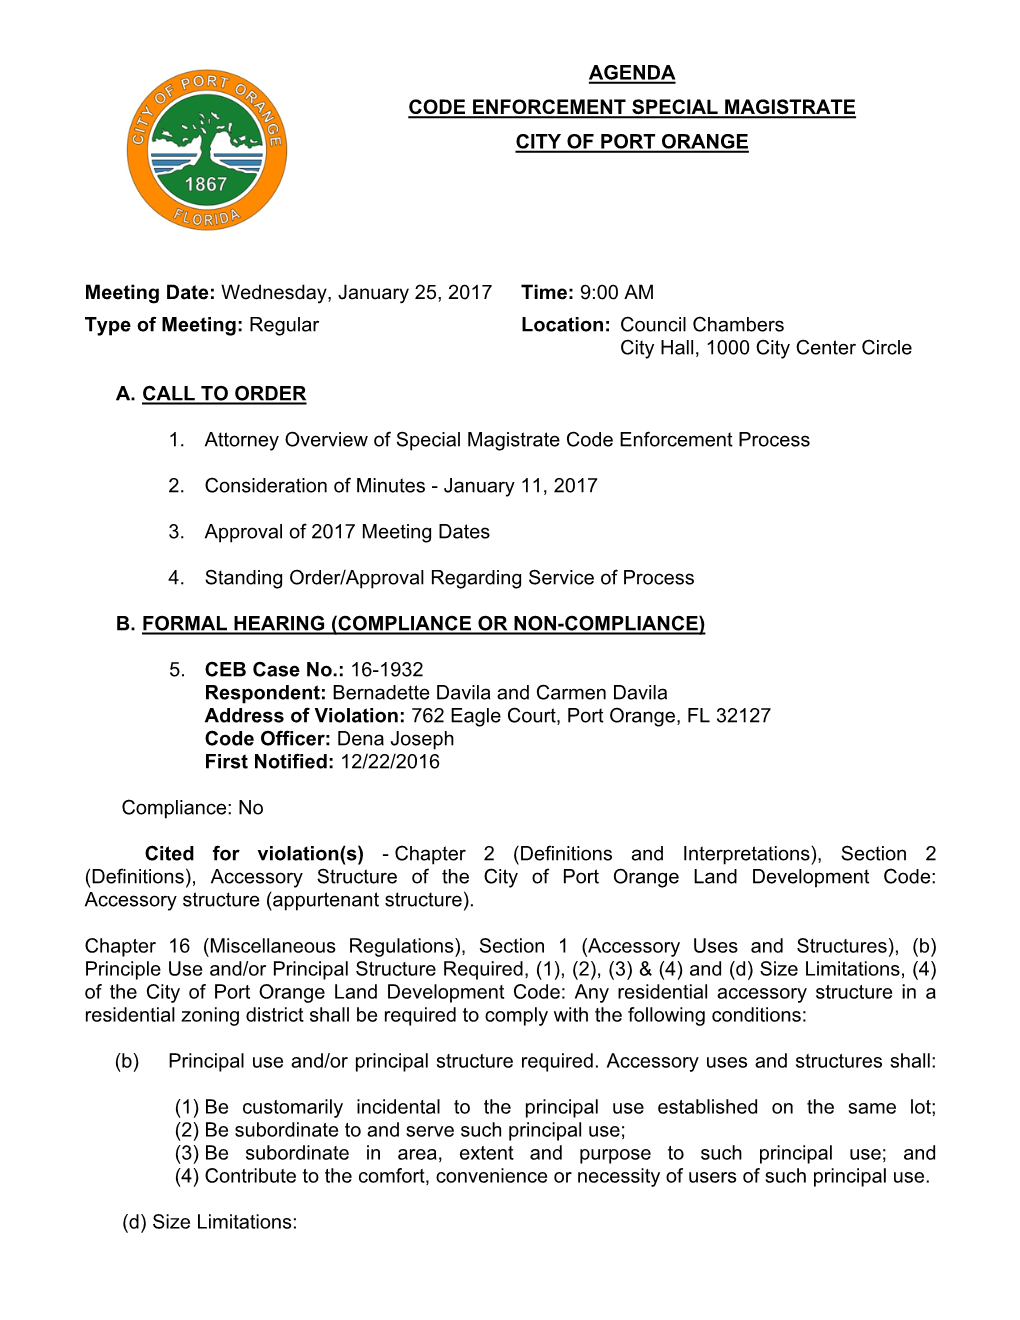 Agenda Code Enforcement Special Magistrate City of Port Orange